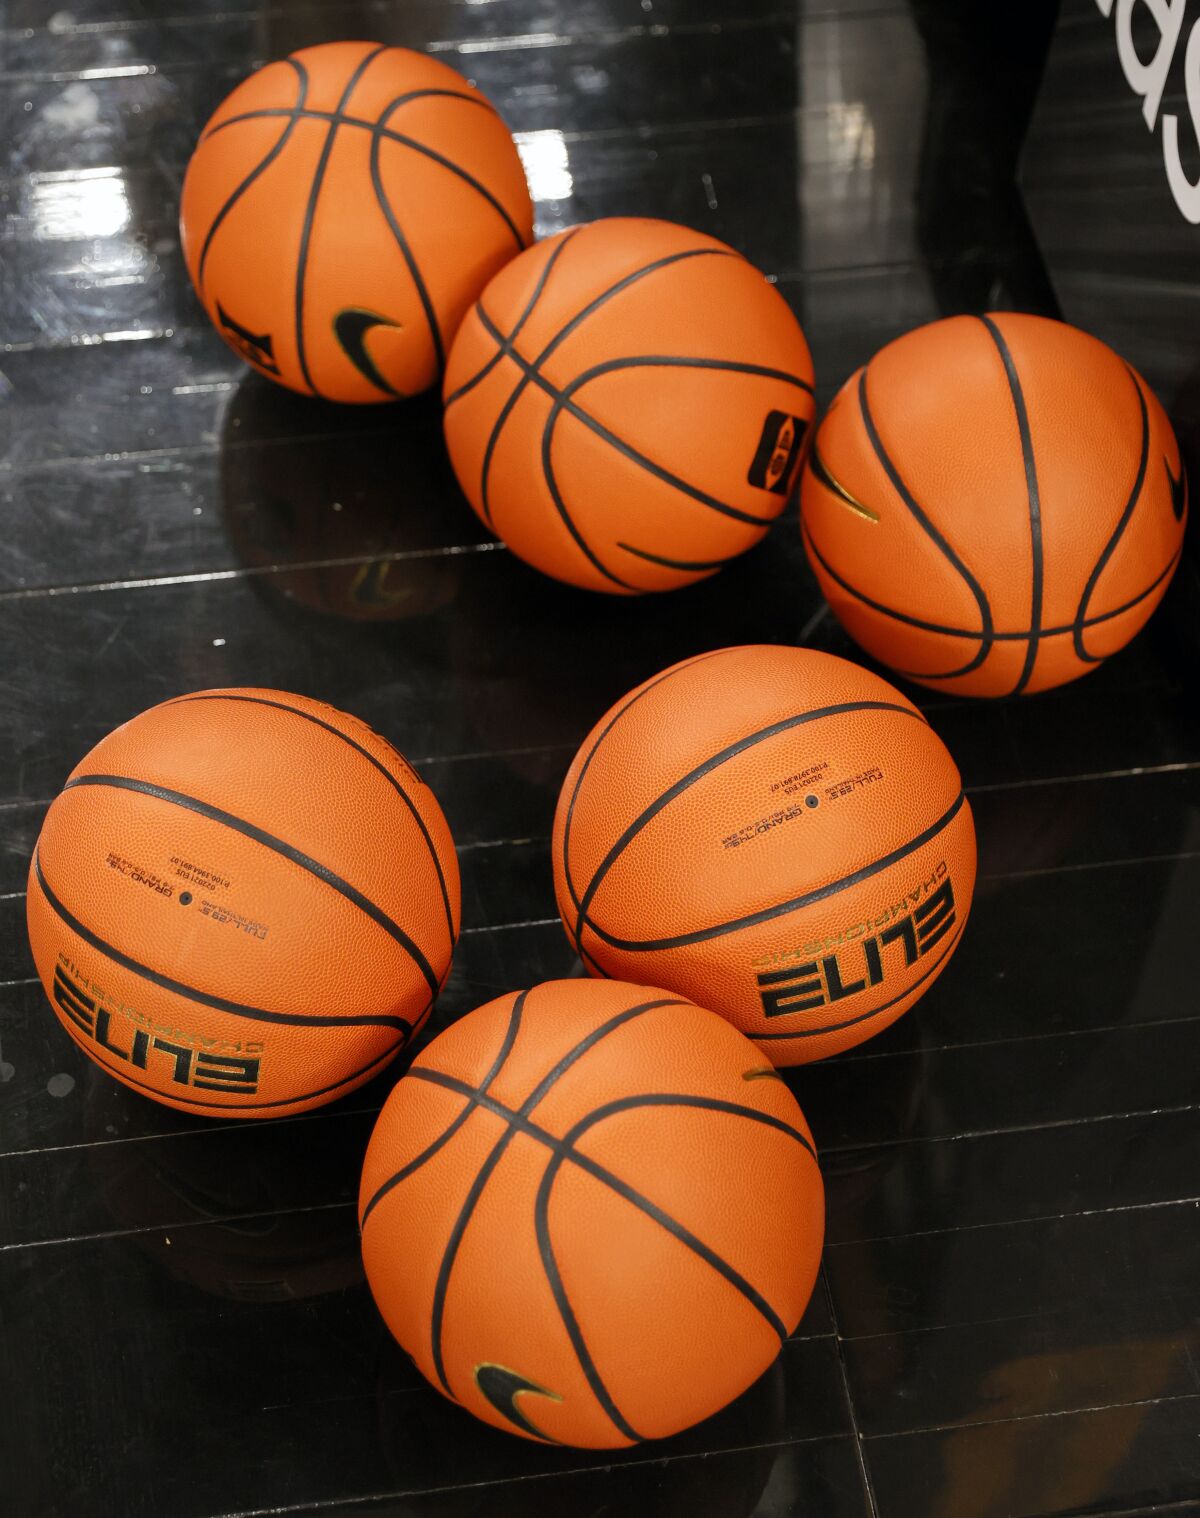 Basketballs on a court.